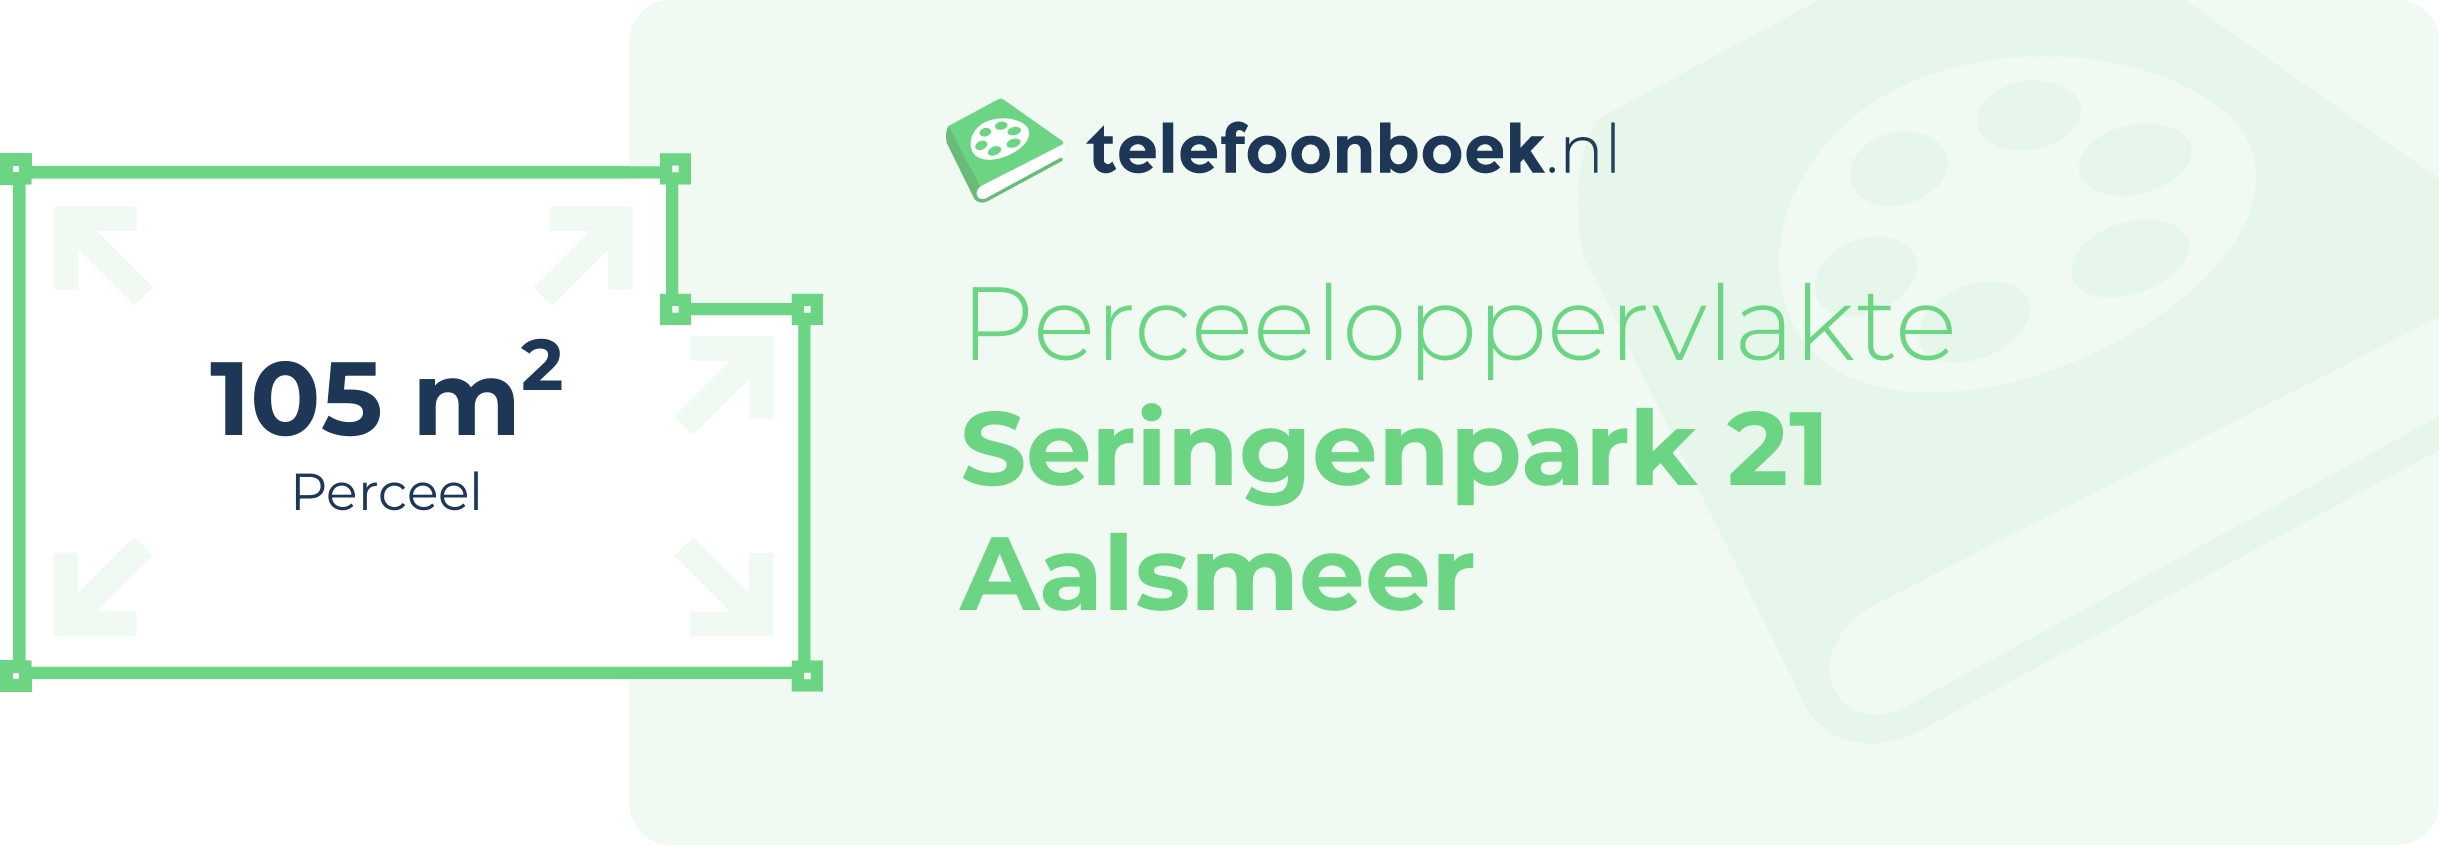 Perceeloppervlakte Seringenpark 21 Aalsmeer